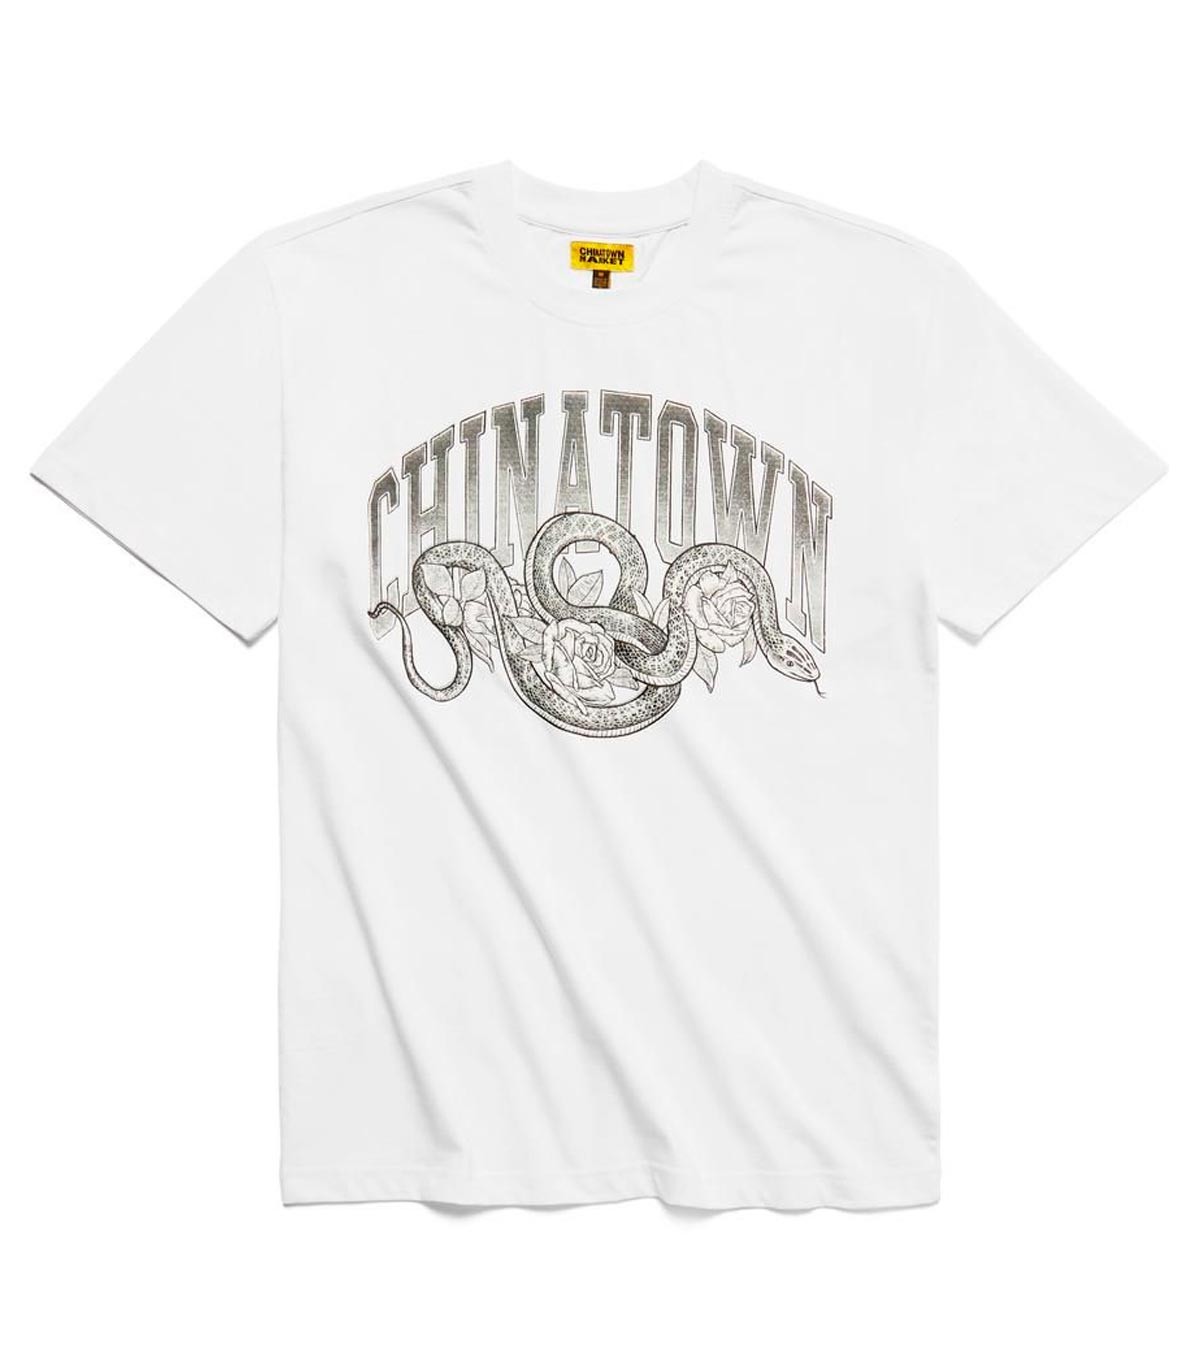 Market - Camiseta Snake Chinatown